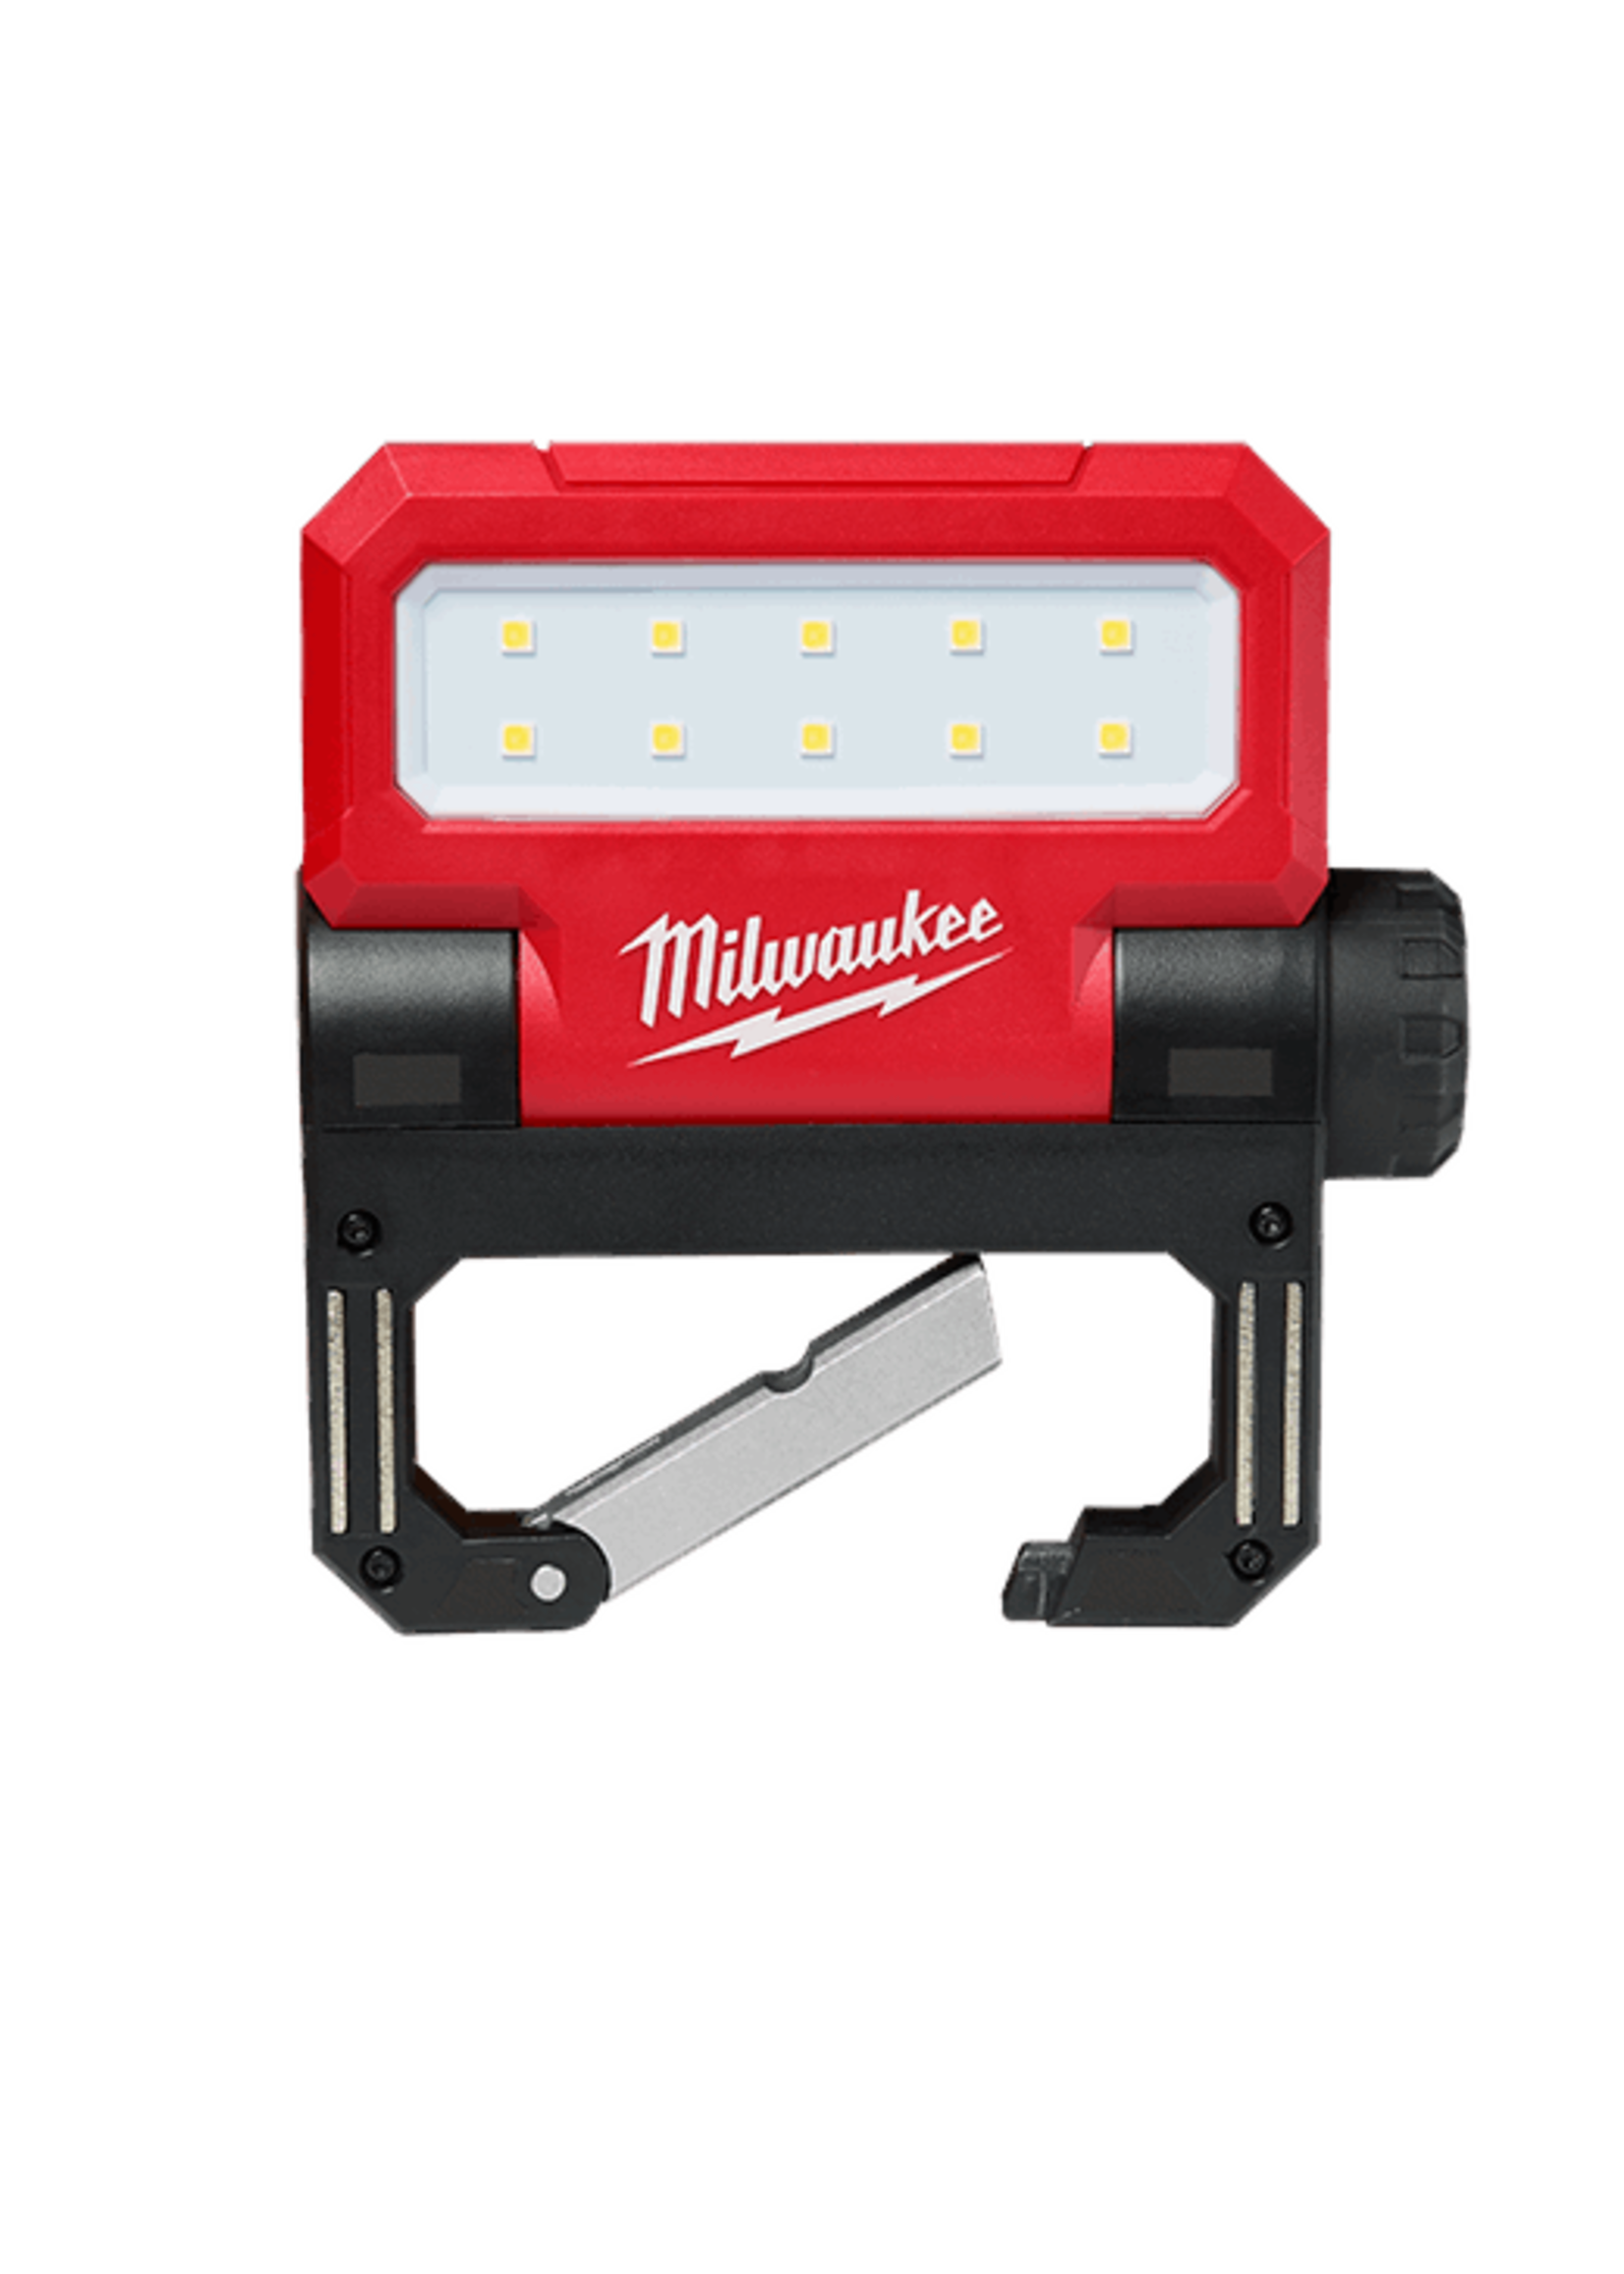 MILWAUKEE MILWAUKEE 2114-21 USB RECHARGEABLE ROVER PIVOTING FLOOD LIGHT